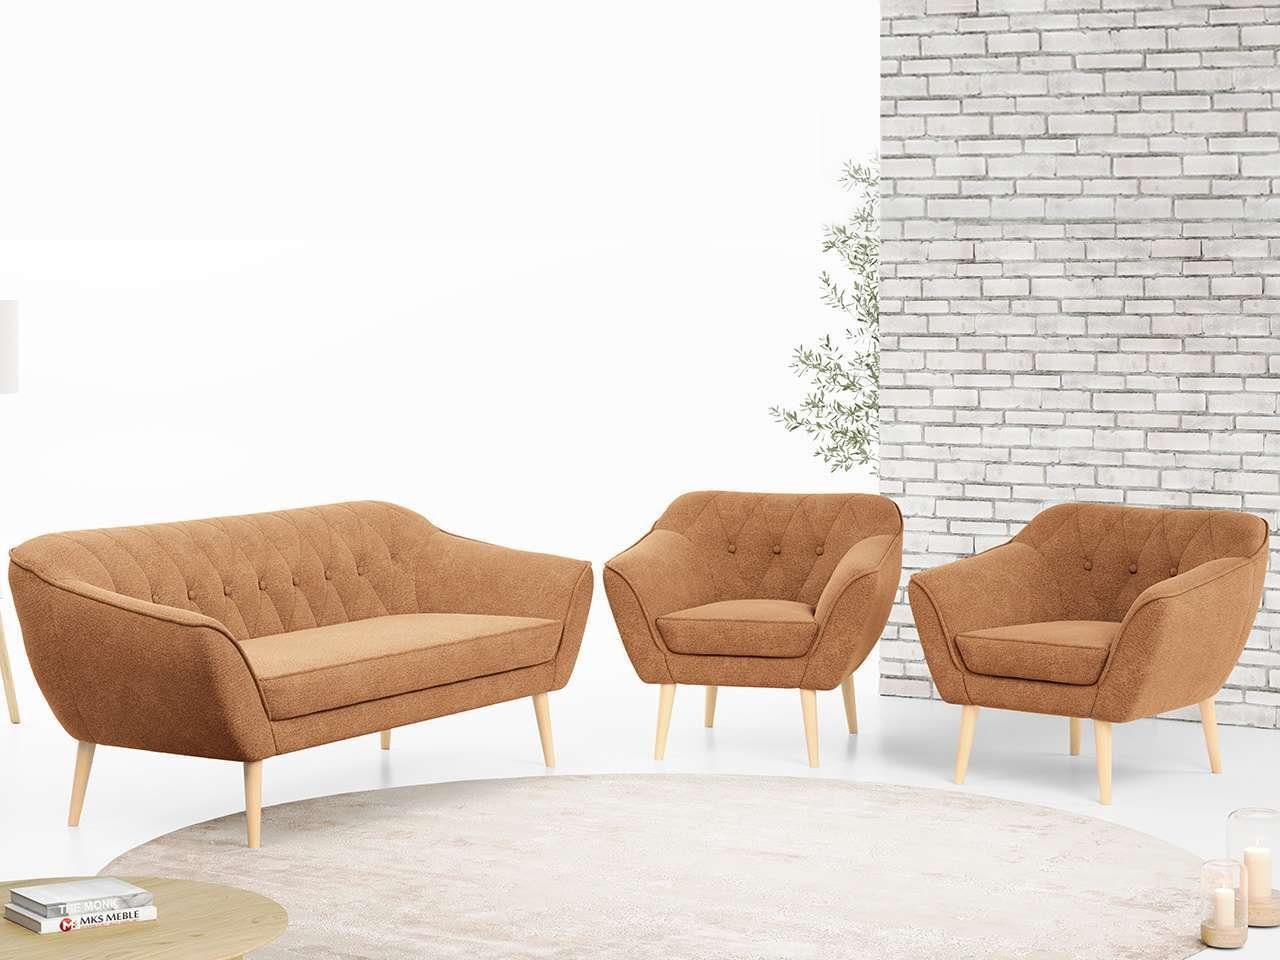 MKS MÖBEL Sofa PIRS 3 1 1, mit Relaxfunktion, Moderne Sofa Set, Skandinavische Deko Orange Matana